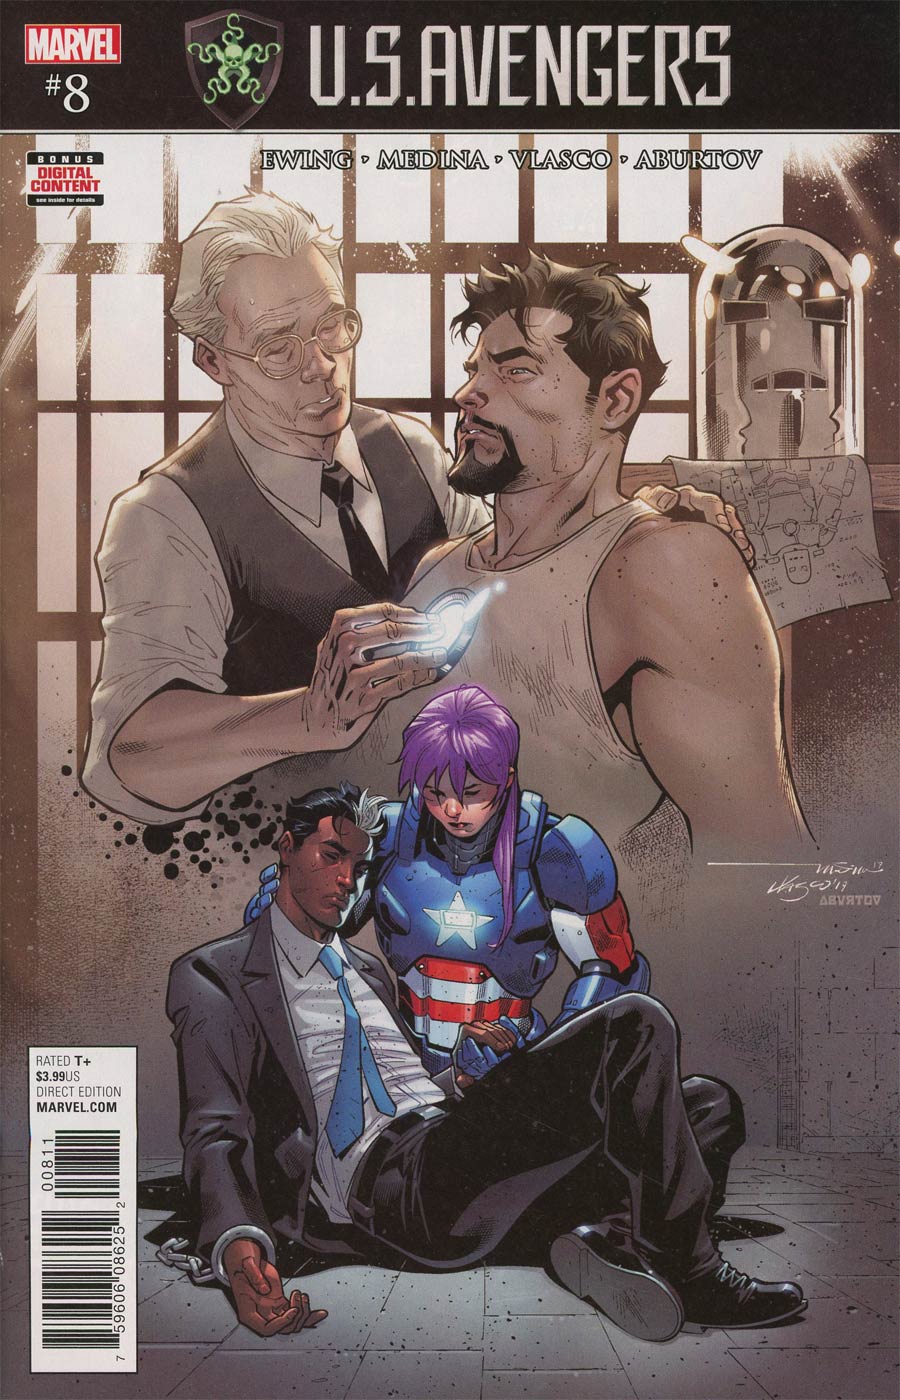 U.S.Avengers #8 (Secret Empire Tie-In)